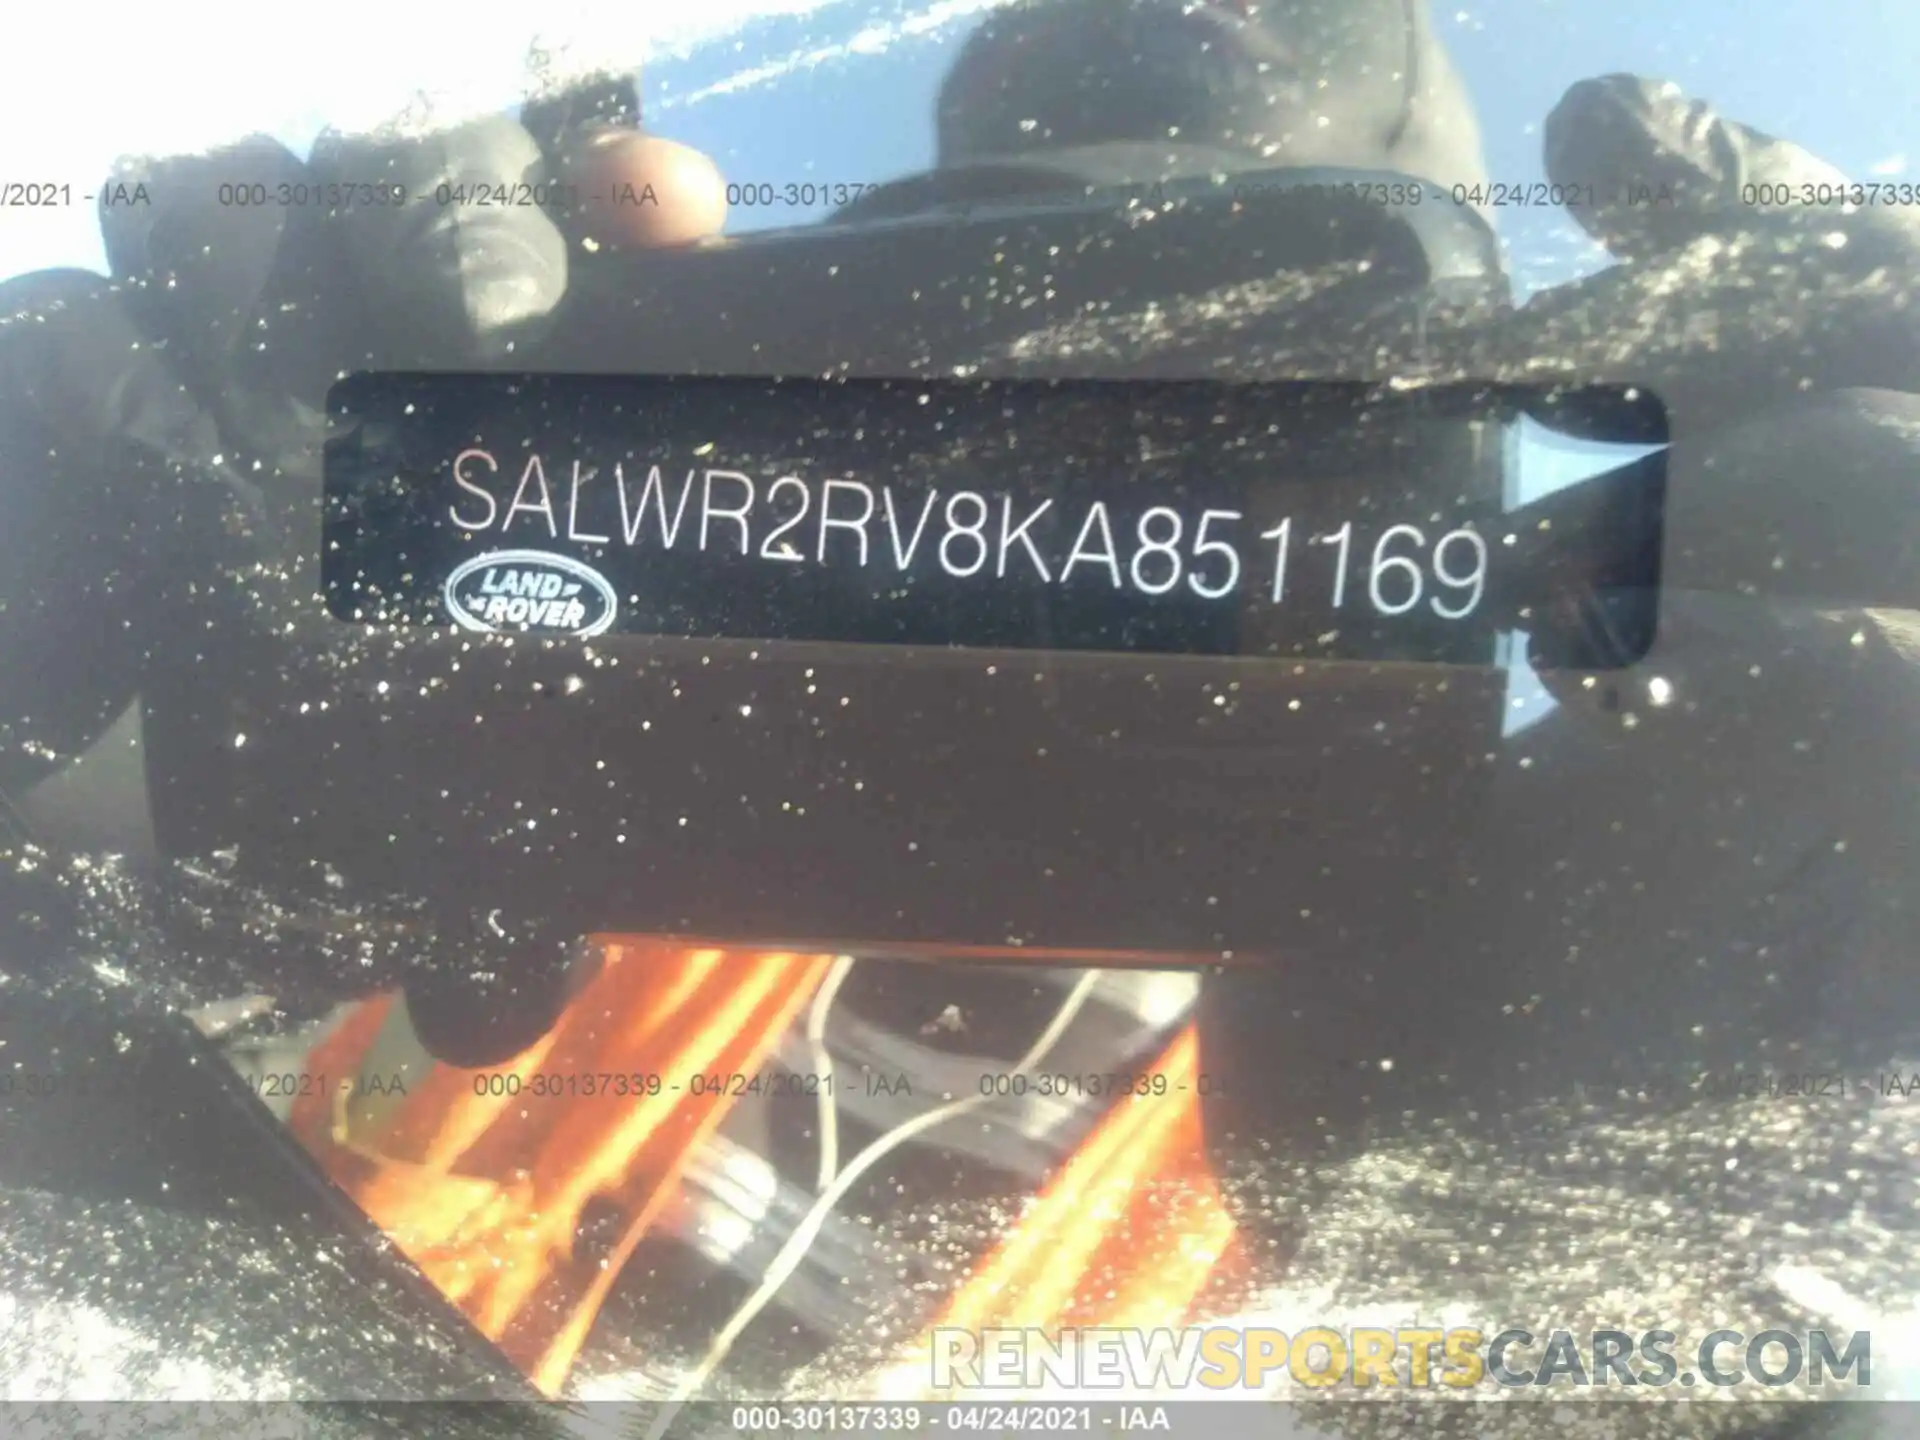 9 Photograph of a damaged car SALWR2RV8KA851169 LAND ROVER RANGE ROVER SPORT 2019